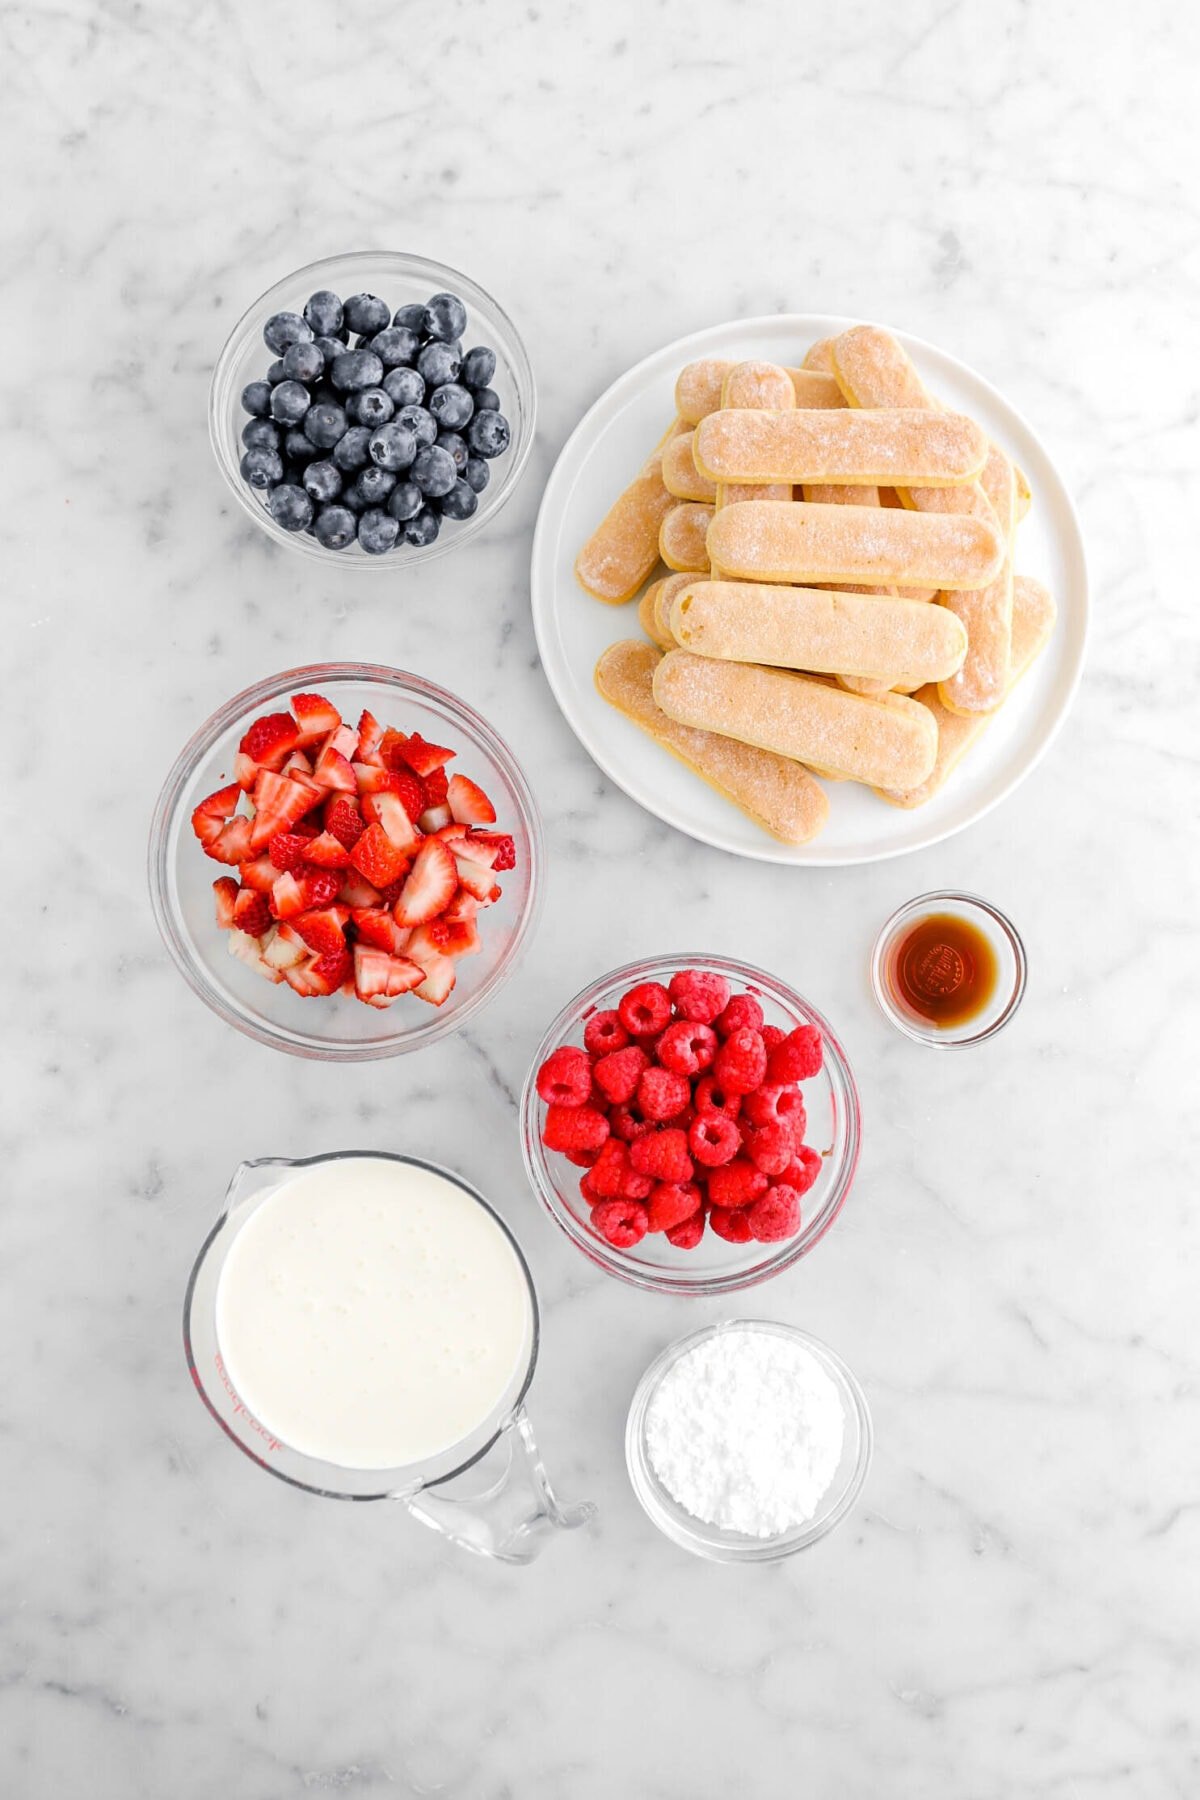 blueberries, ladyfinger cookies, chopped strawberries, raspberries, vanilla, heavy cream, and powdered sugar on marble surface.